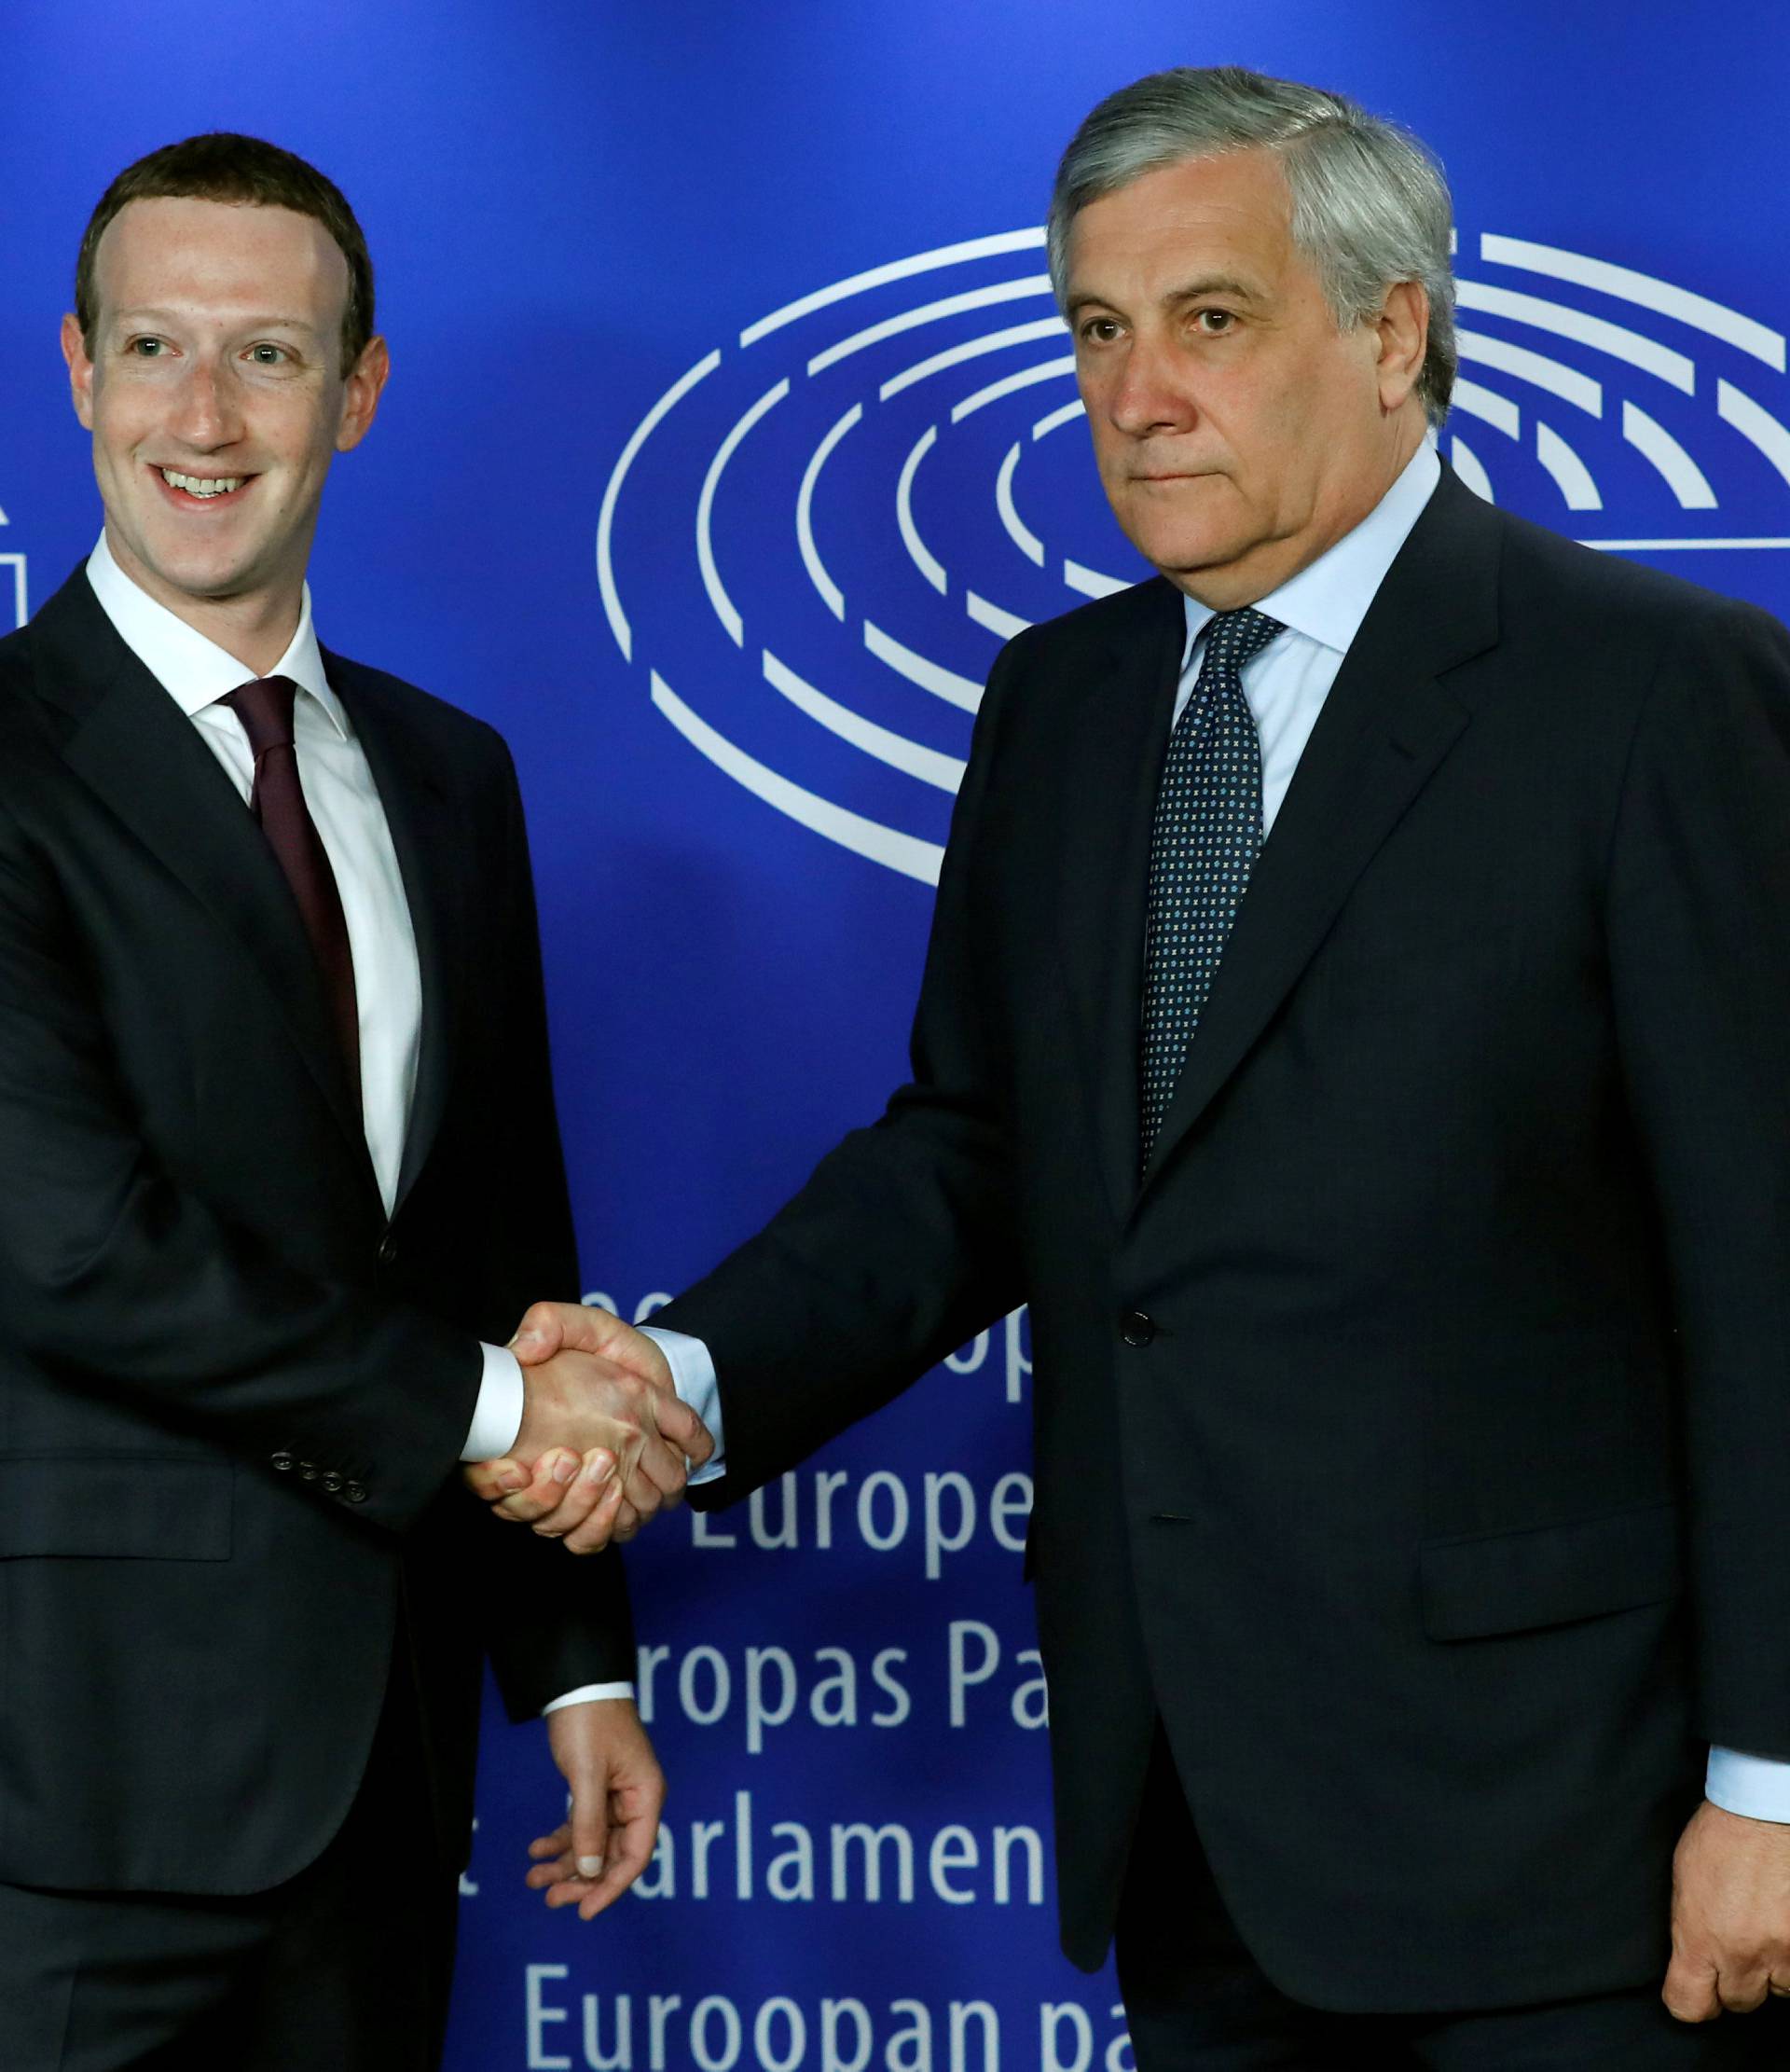 Facebook's CEO Mark Zuckerberg shakes hands with European Parliament President Antonio Tajani at the European Parliament, in Brussels